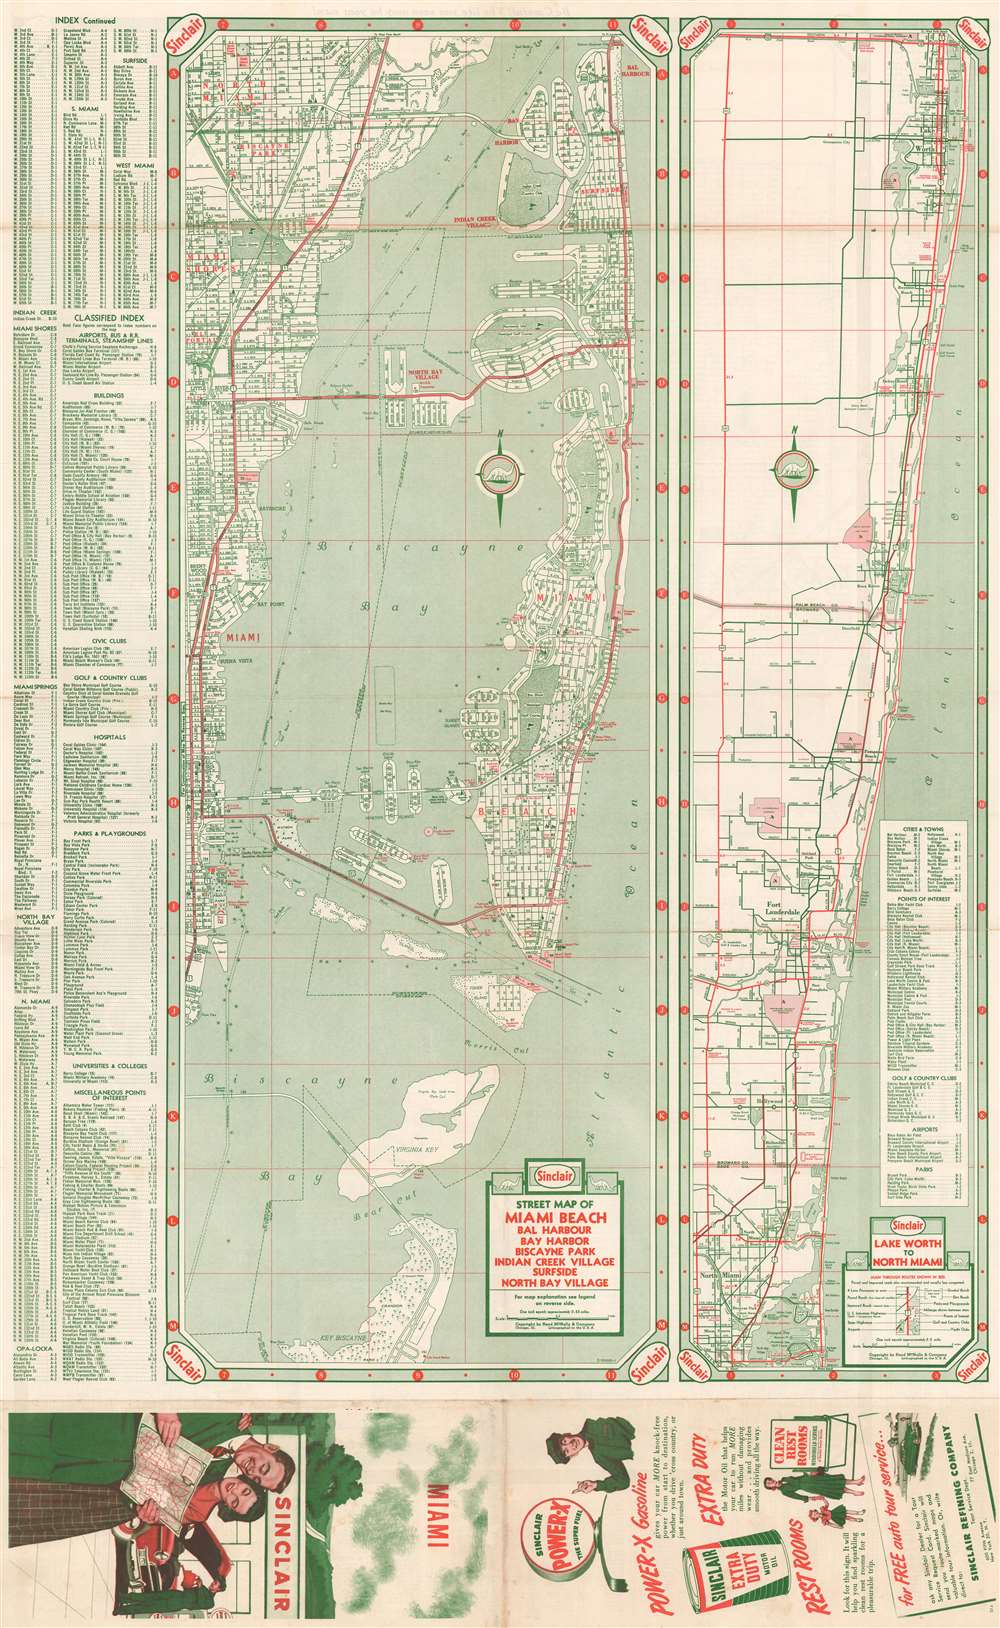 Sinclair Street Map of Miami - Opa Locka - North Miami - Biscayne Park - Miami Shores - El Portal - Hialeah - Miami Springs - West Miami - Coral Gables - South Miami. - Alternate View 1